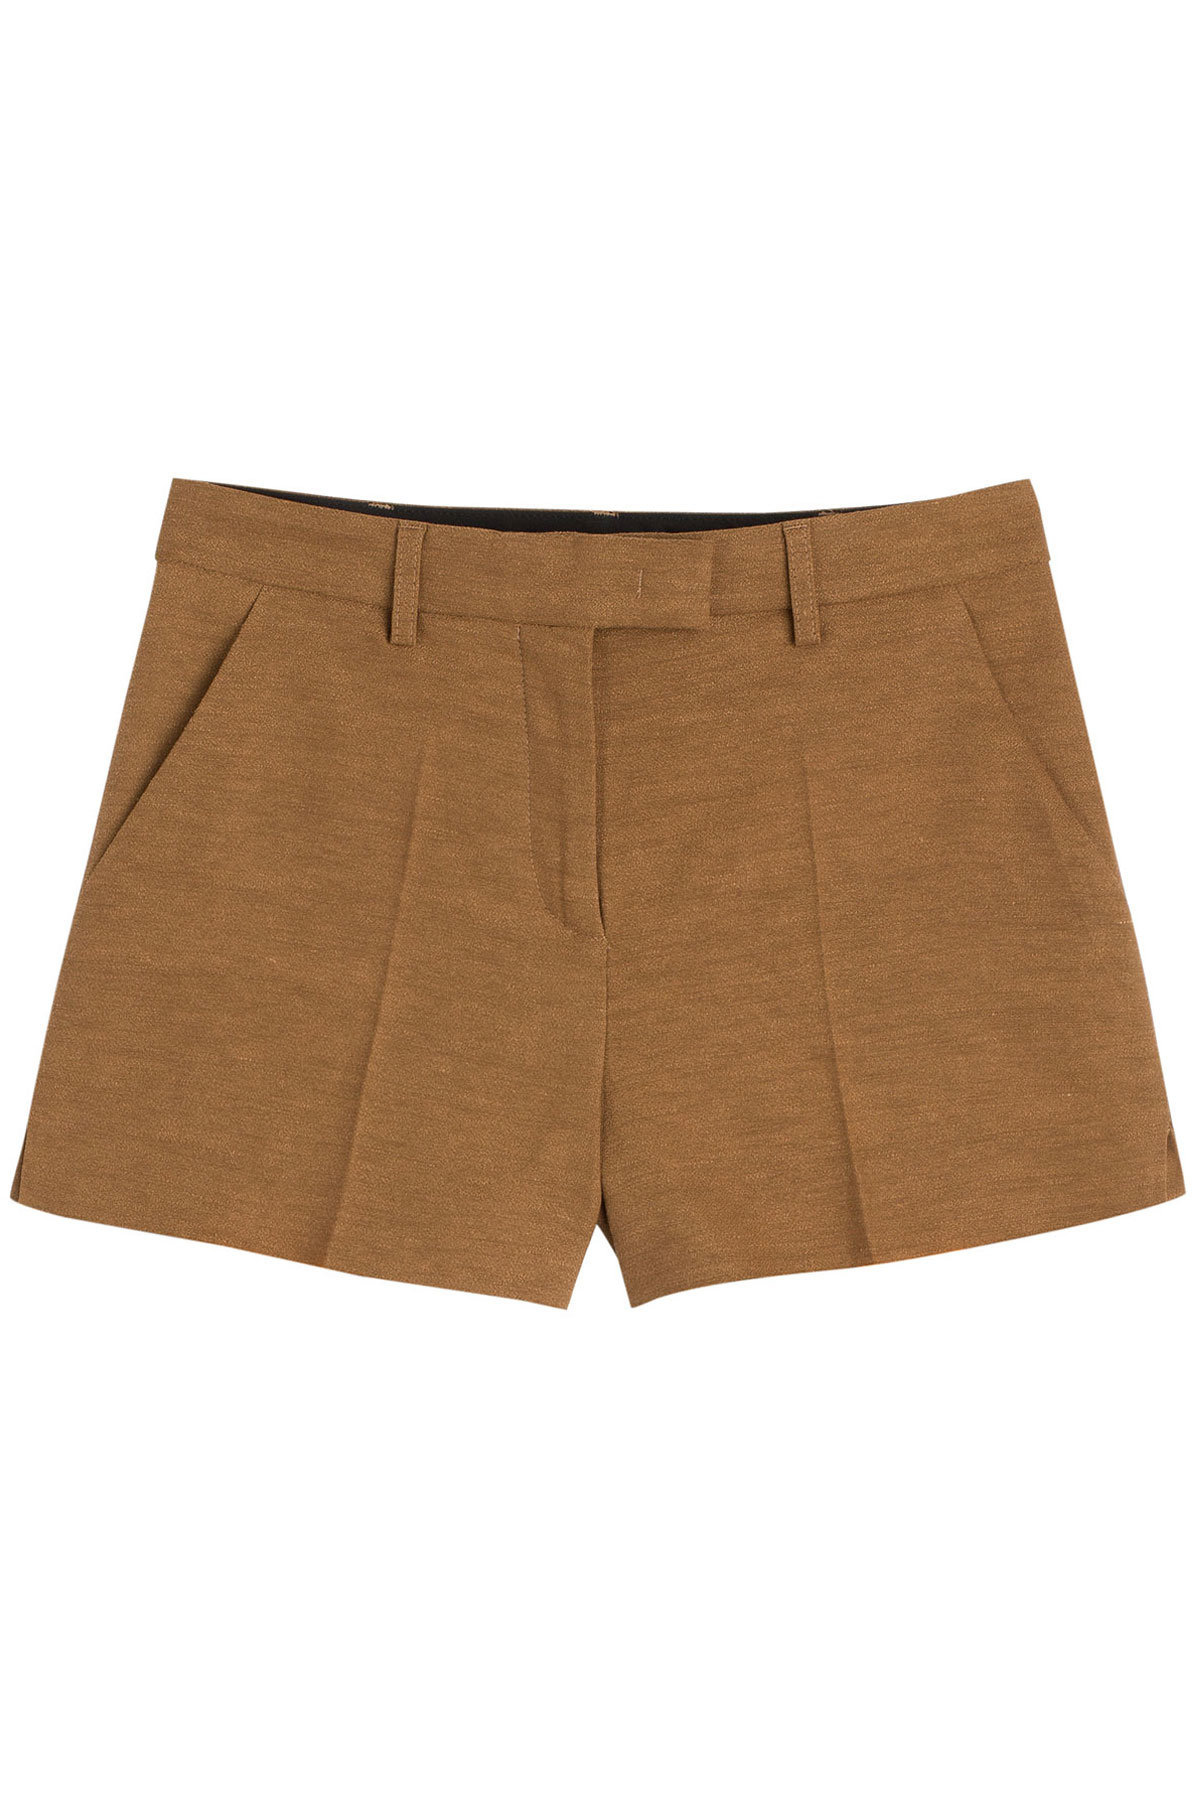 Emilio Pucci - Shantung Linen Shorts